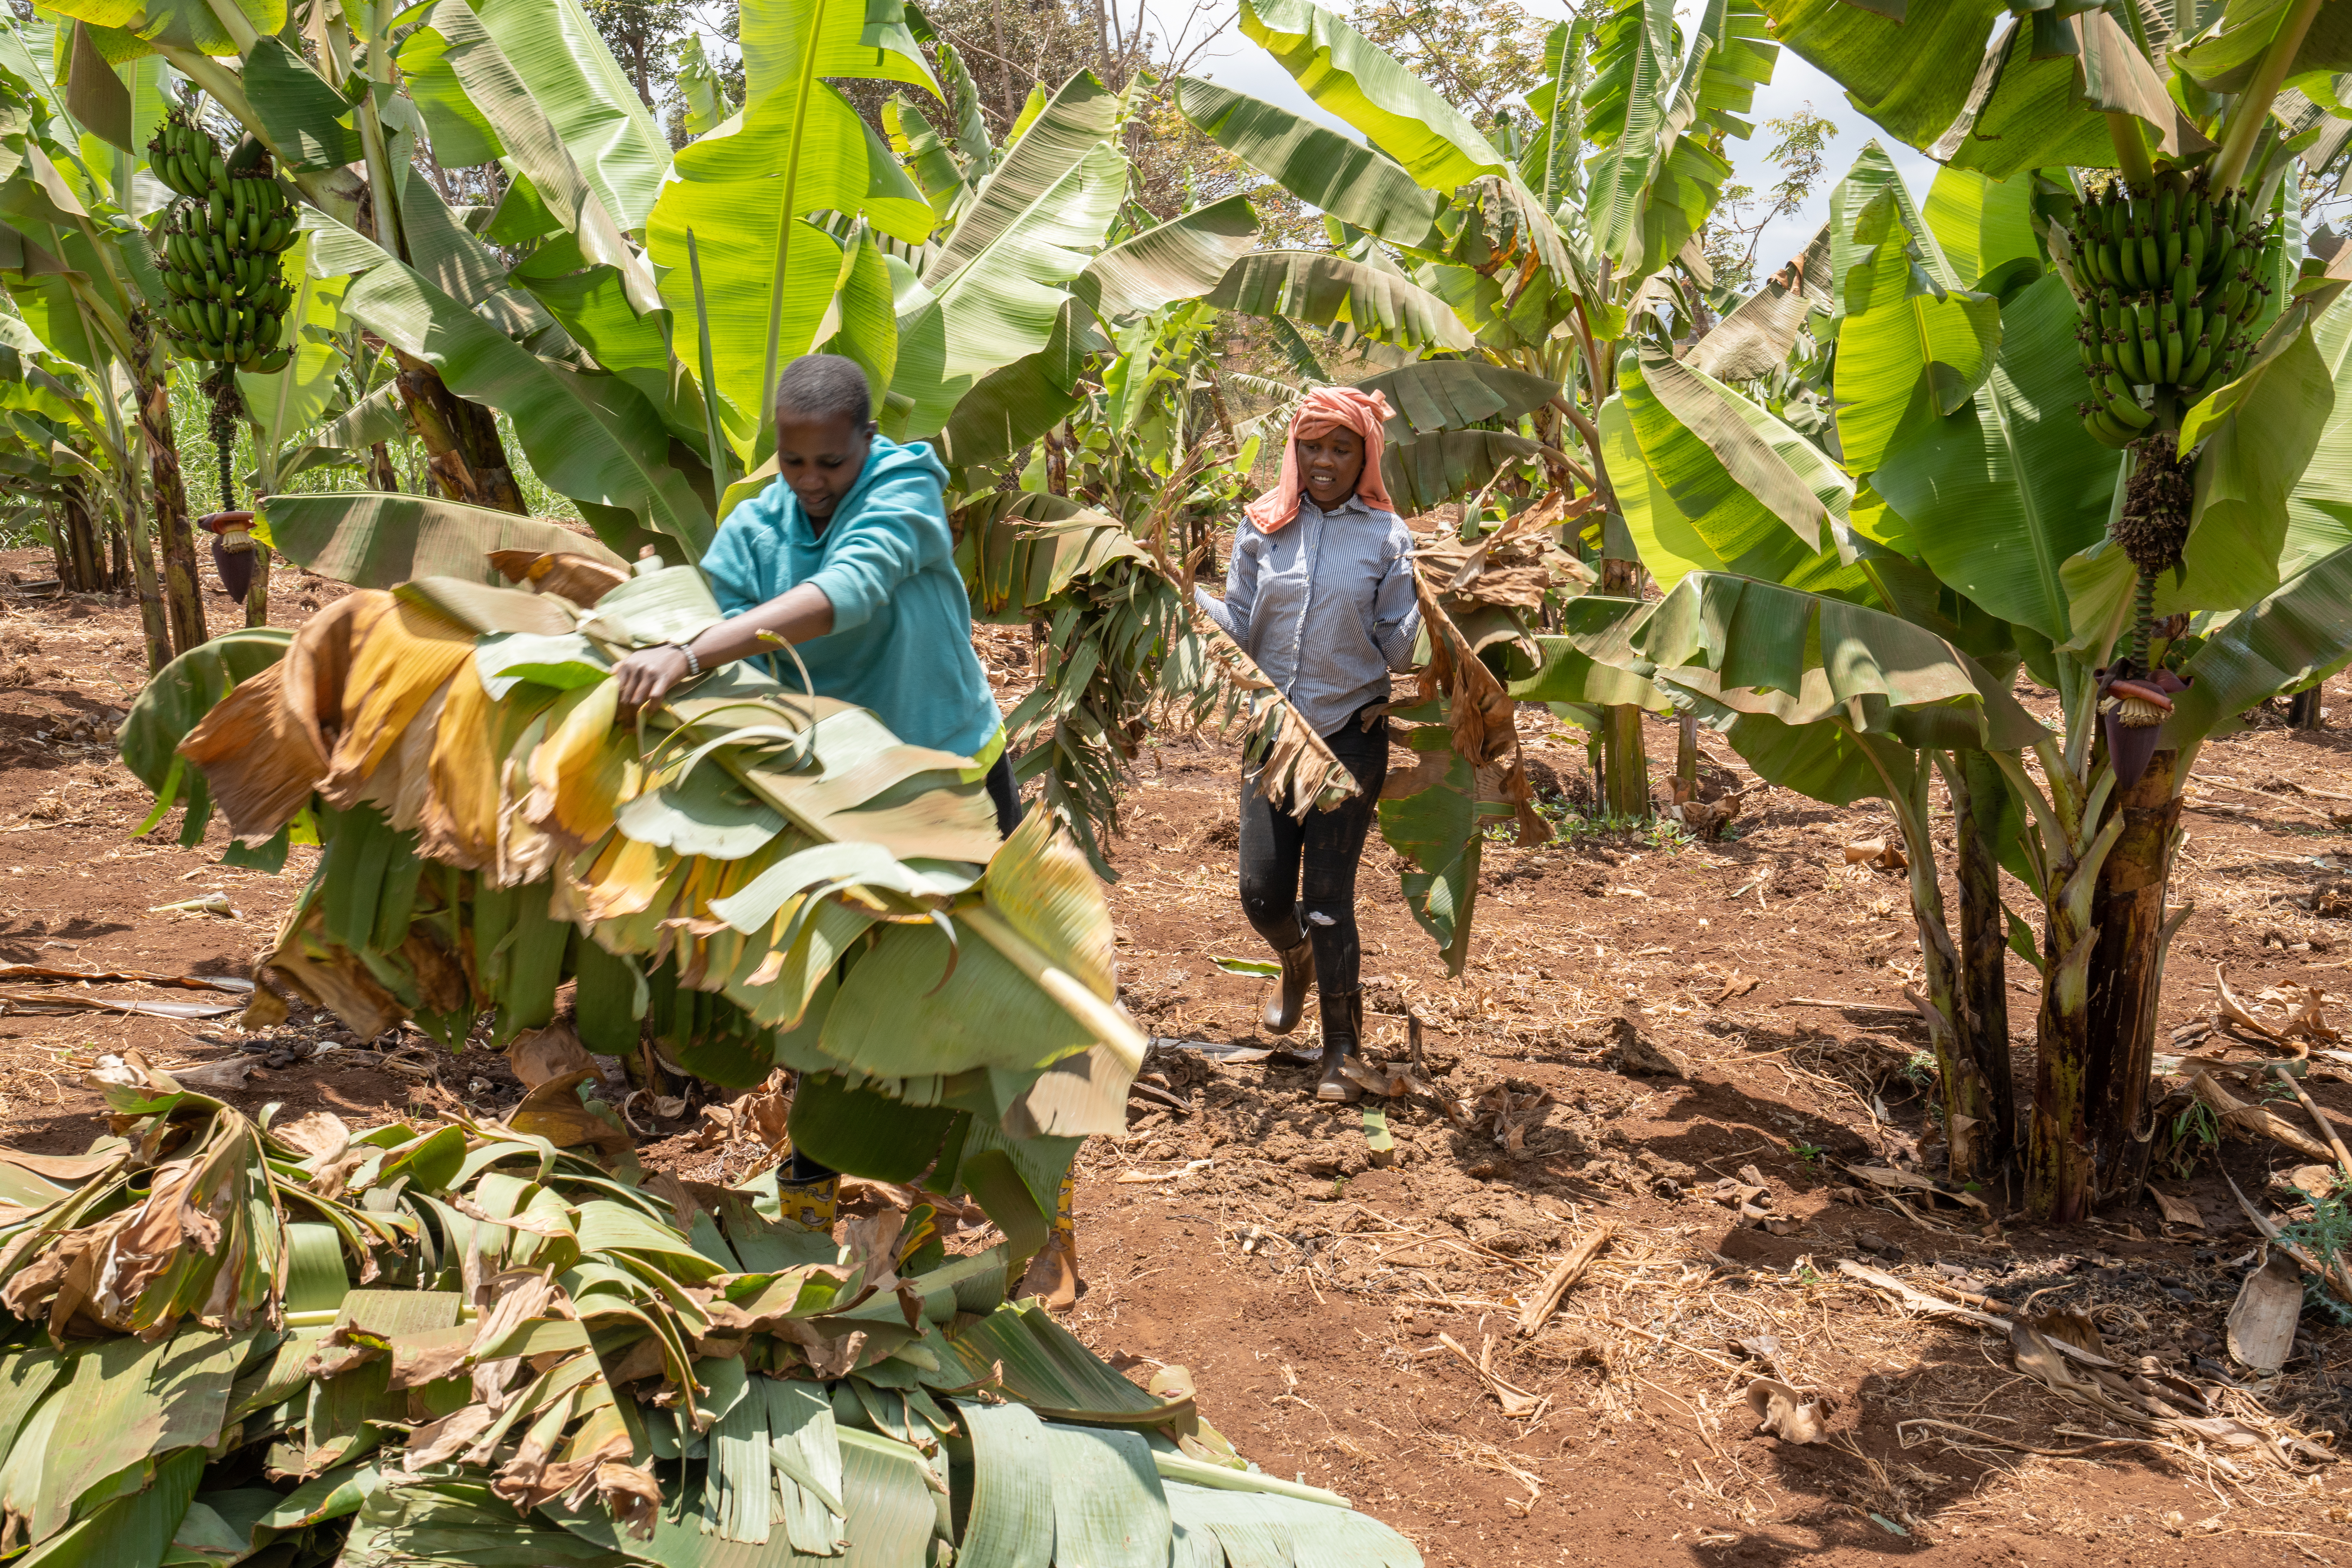 Neema helping on the ecoFarm with harvesting of the bananas